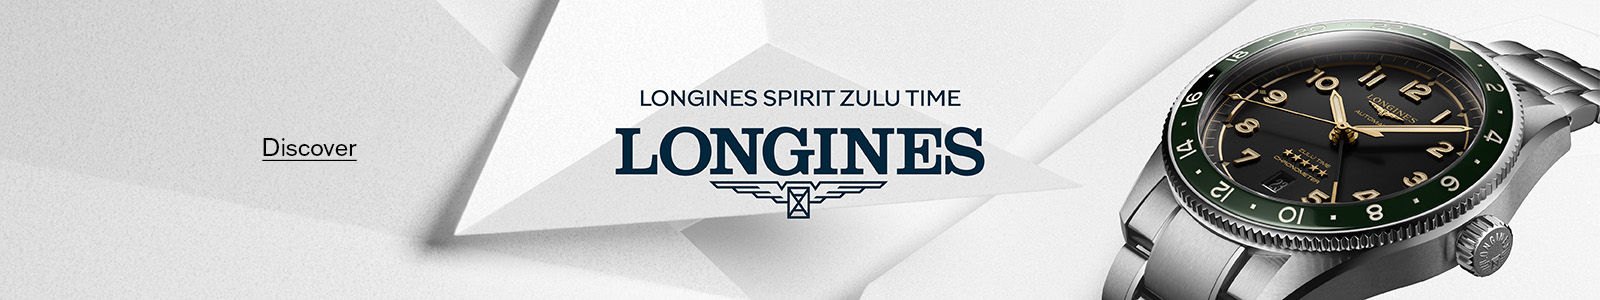 Longines Spirit Zulu Time, Longines, Discover